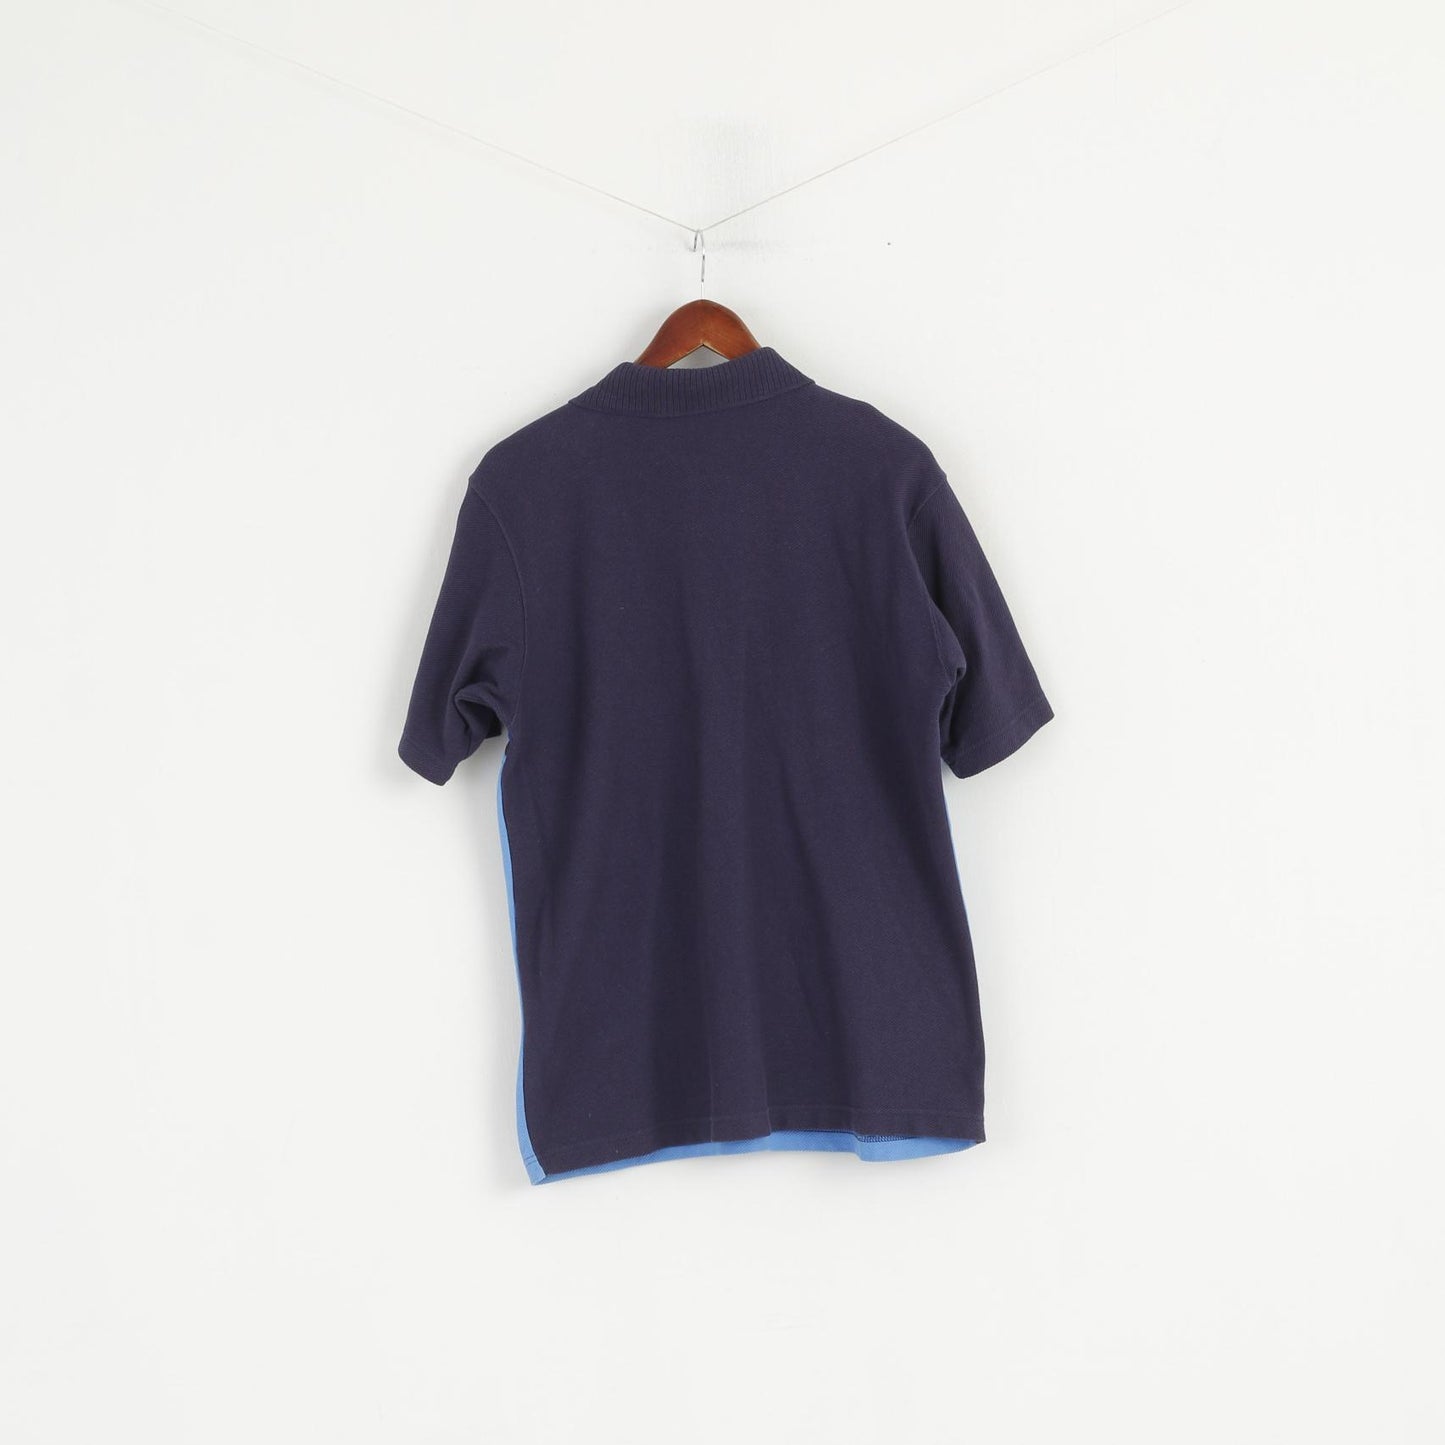 Adidas Men M Polo Shirt Navy Blue Cotton Vintage 00' Zip Neck Sportswear Top